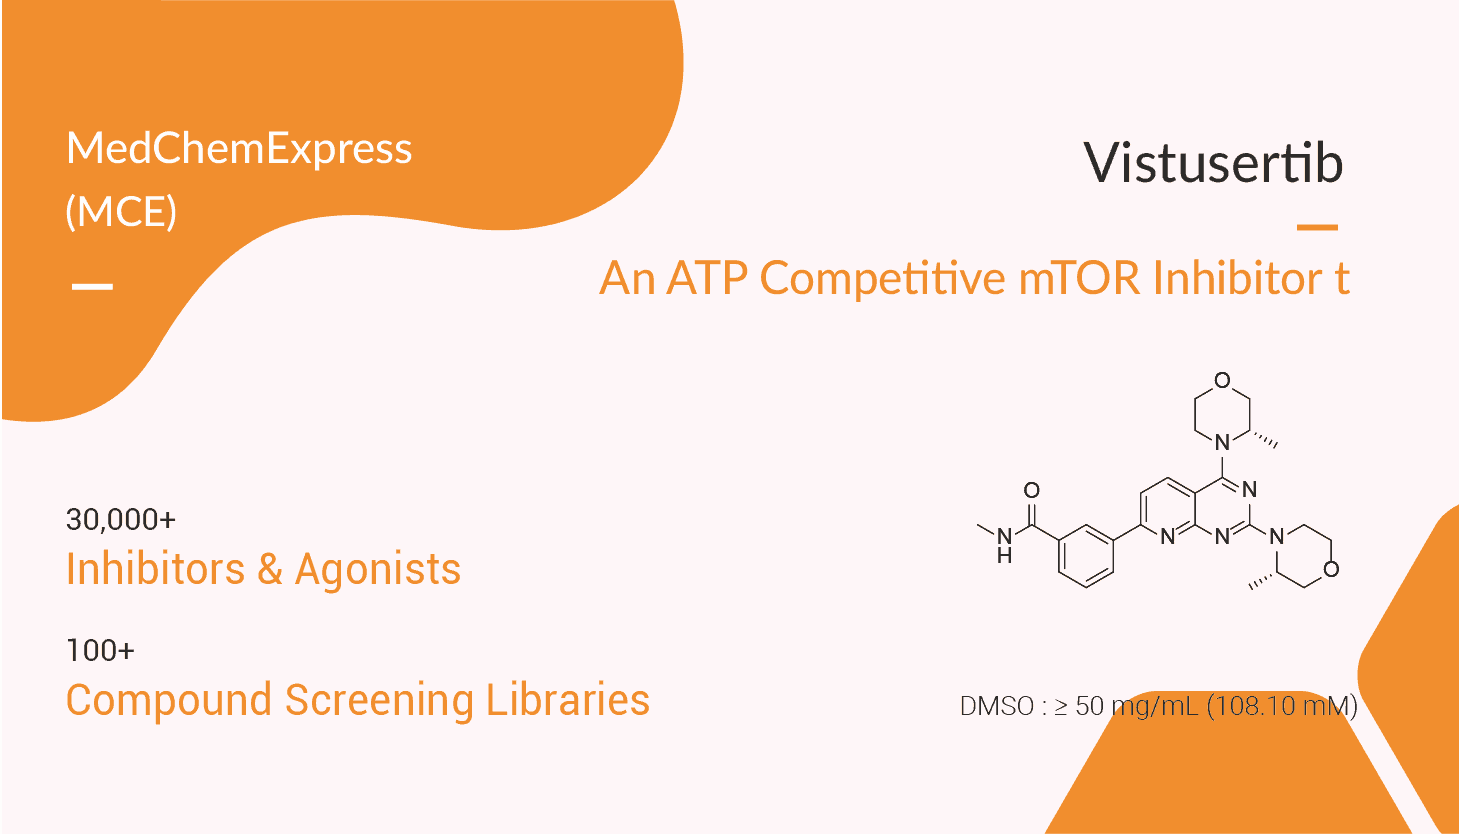 Vistusertib 2022 0519 - Vistusertib (AZD2014) is an ATP Competitive mTOR Inhibitor